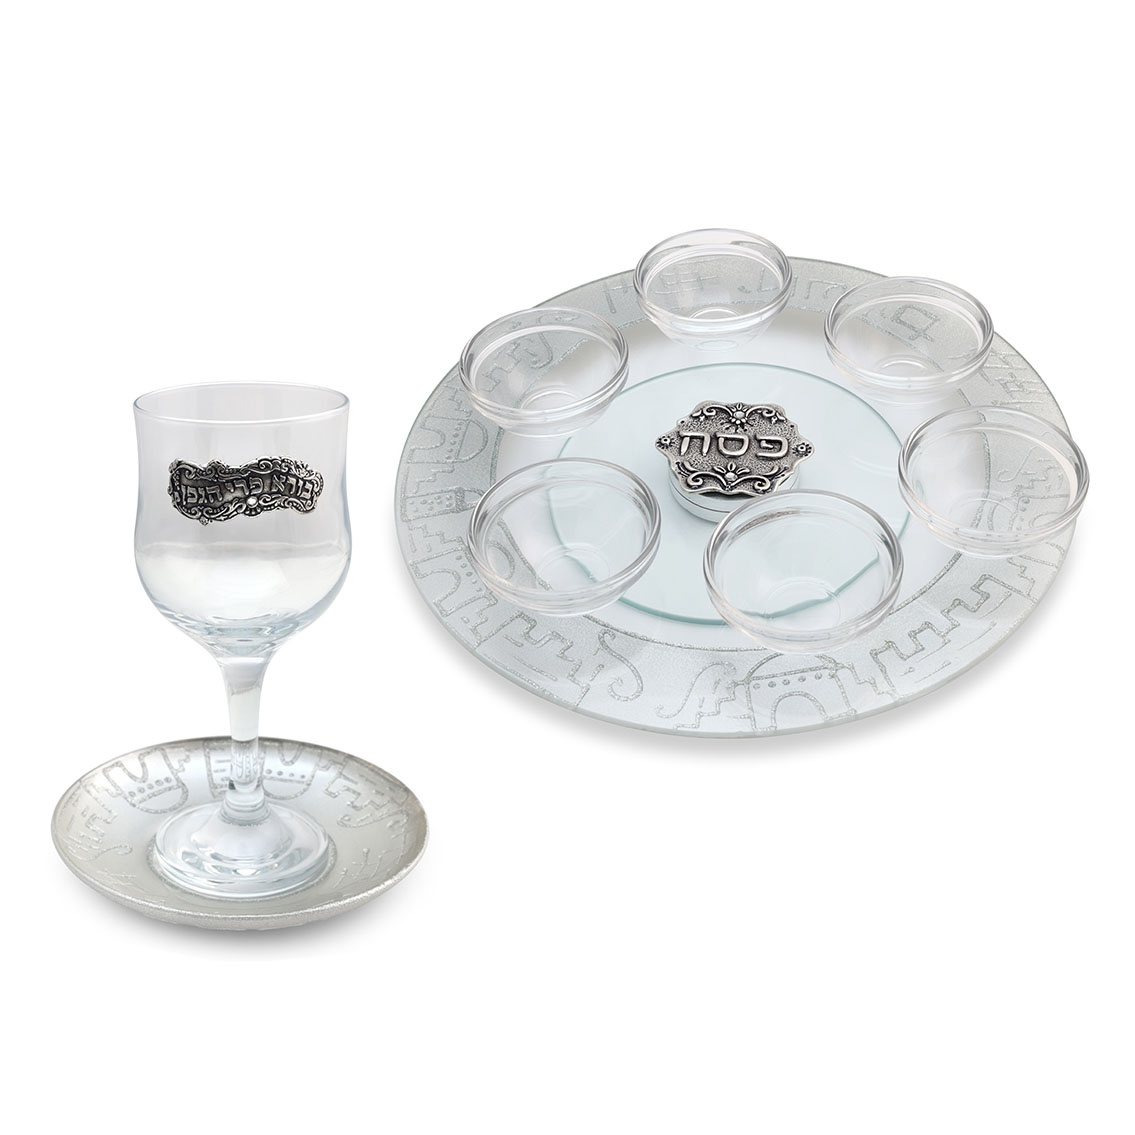 Must-Have Passover Seder Essentials Gift Set By Lily Art - Jerusalem - 1